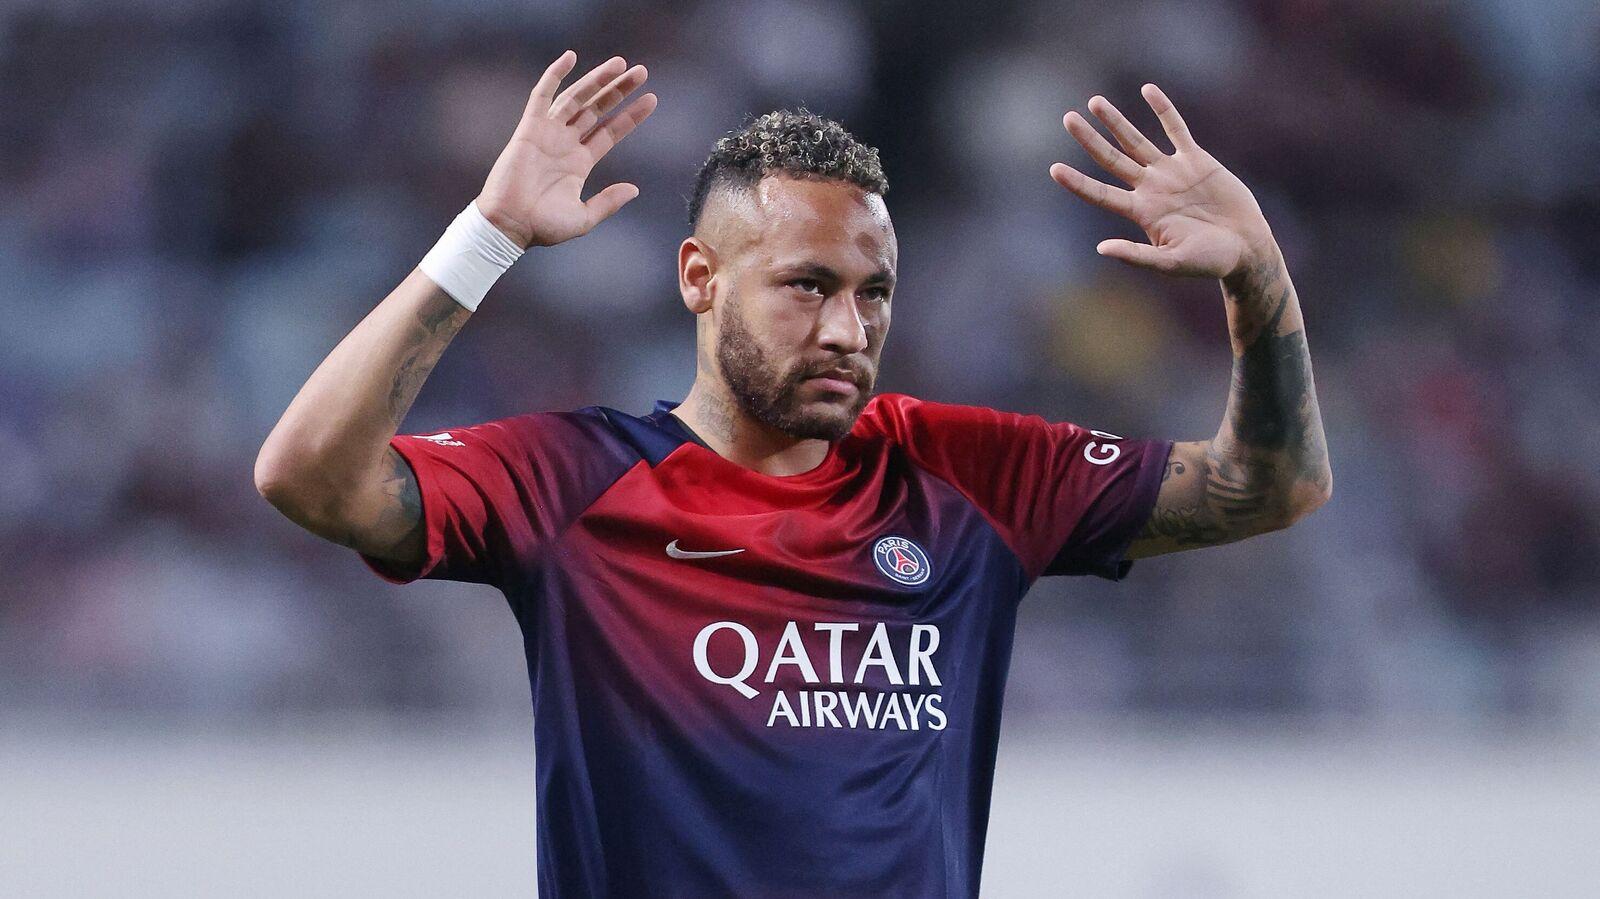 Neymar to play for Al Hilal in Saudi Arabia deal underway for